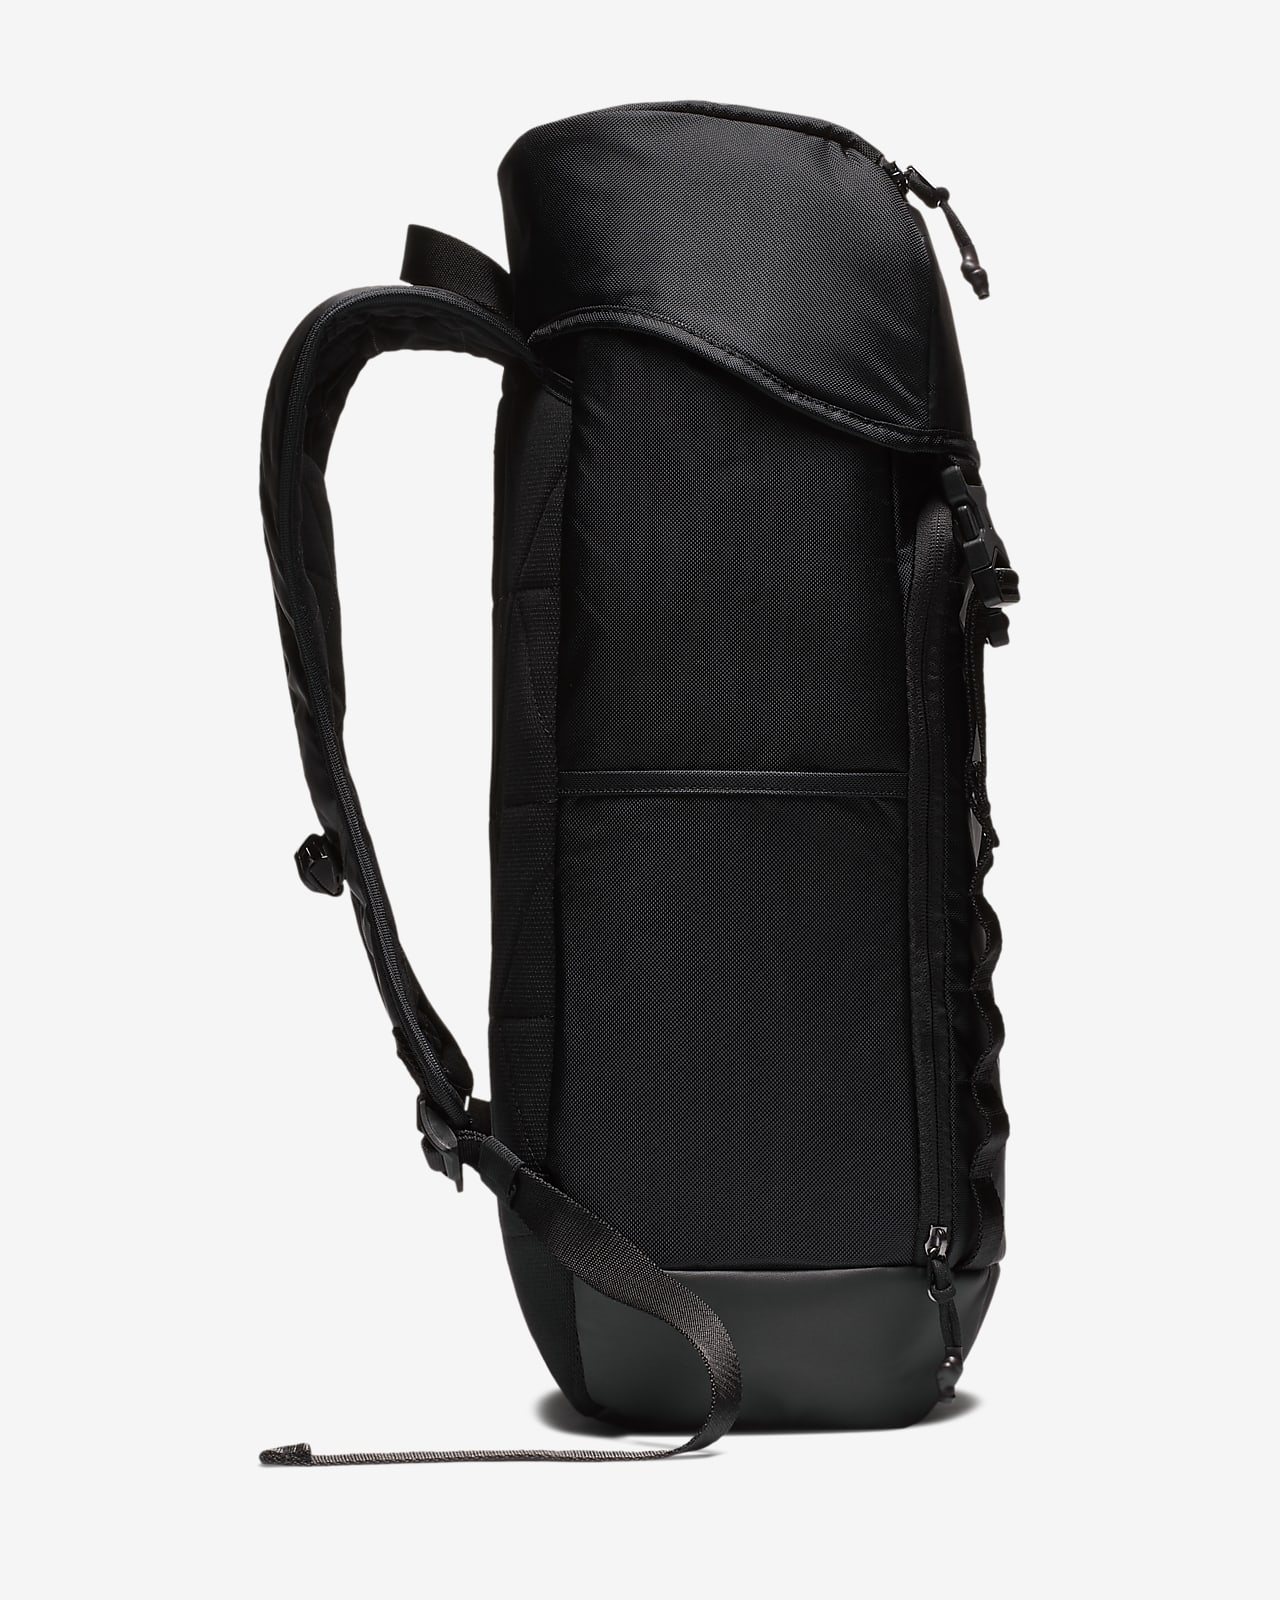 nike vapor 2. backpack review